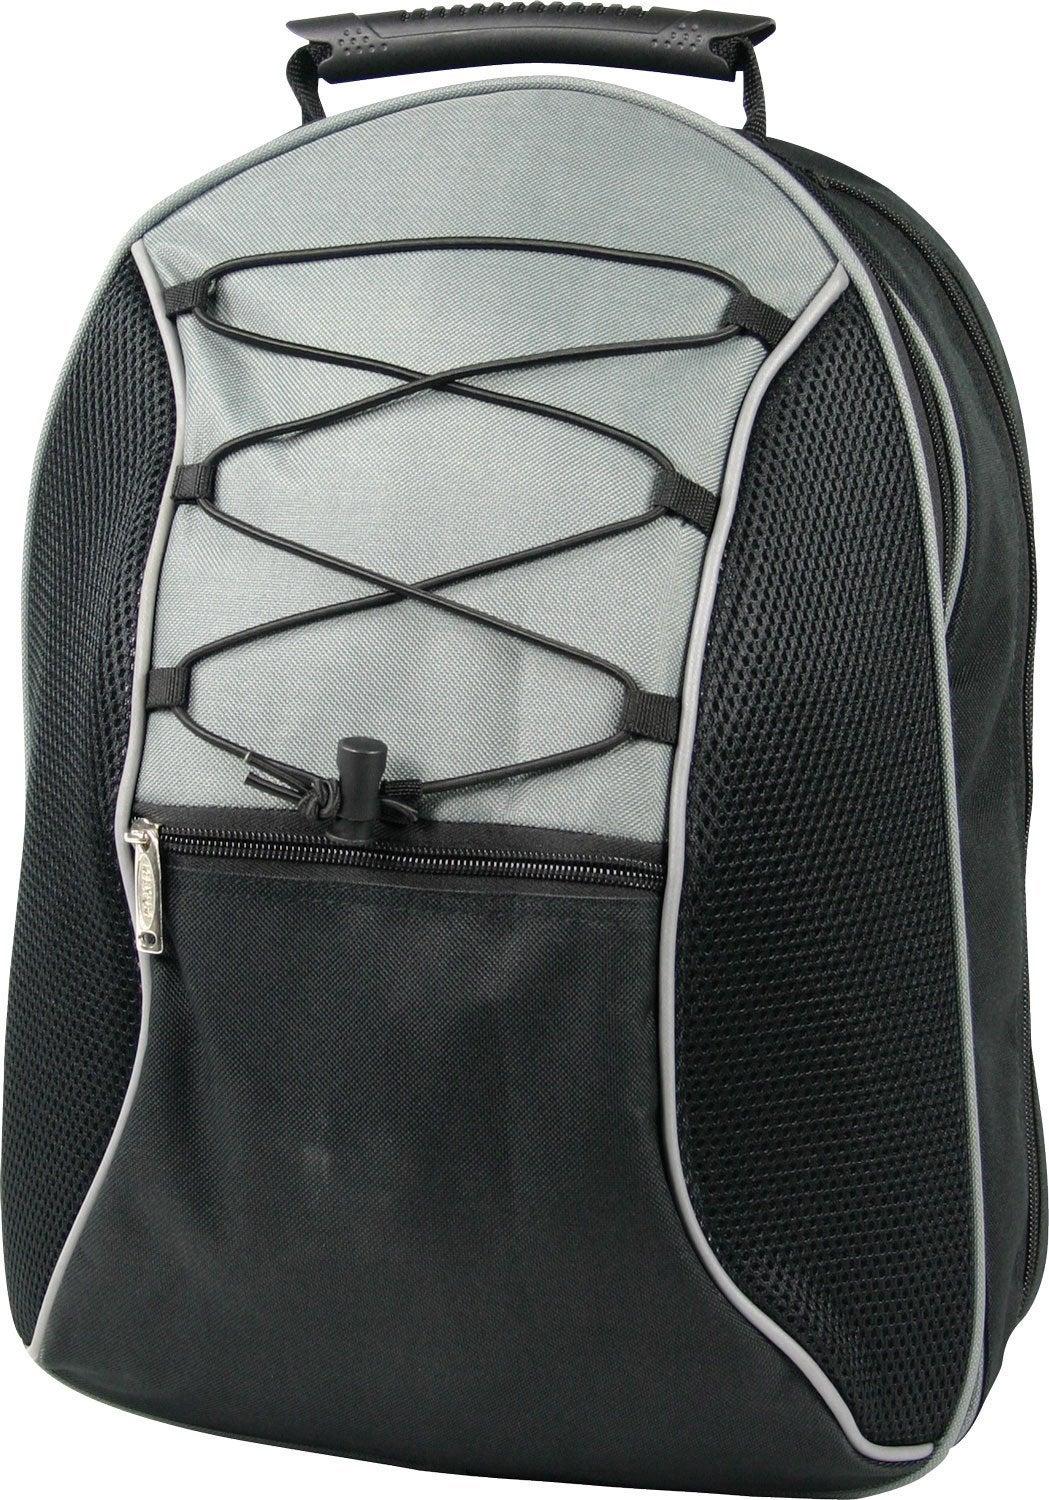 Metro picnic backpack